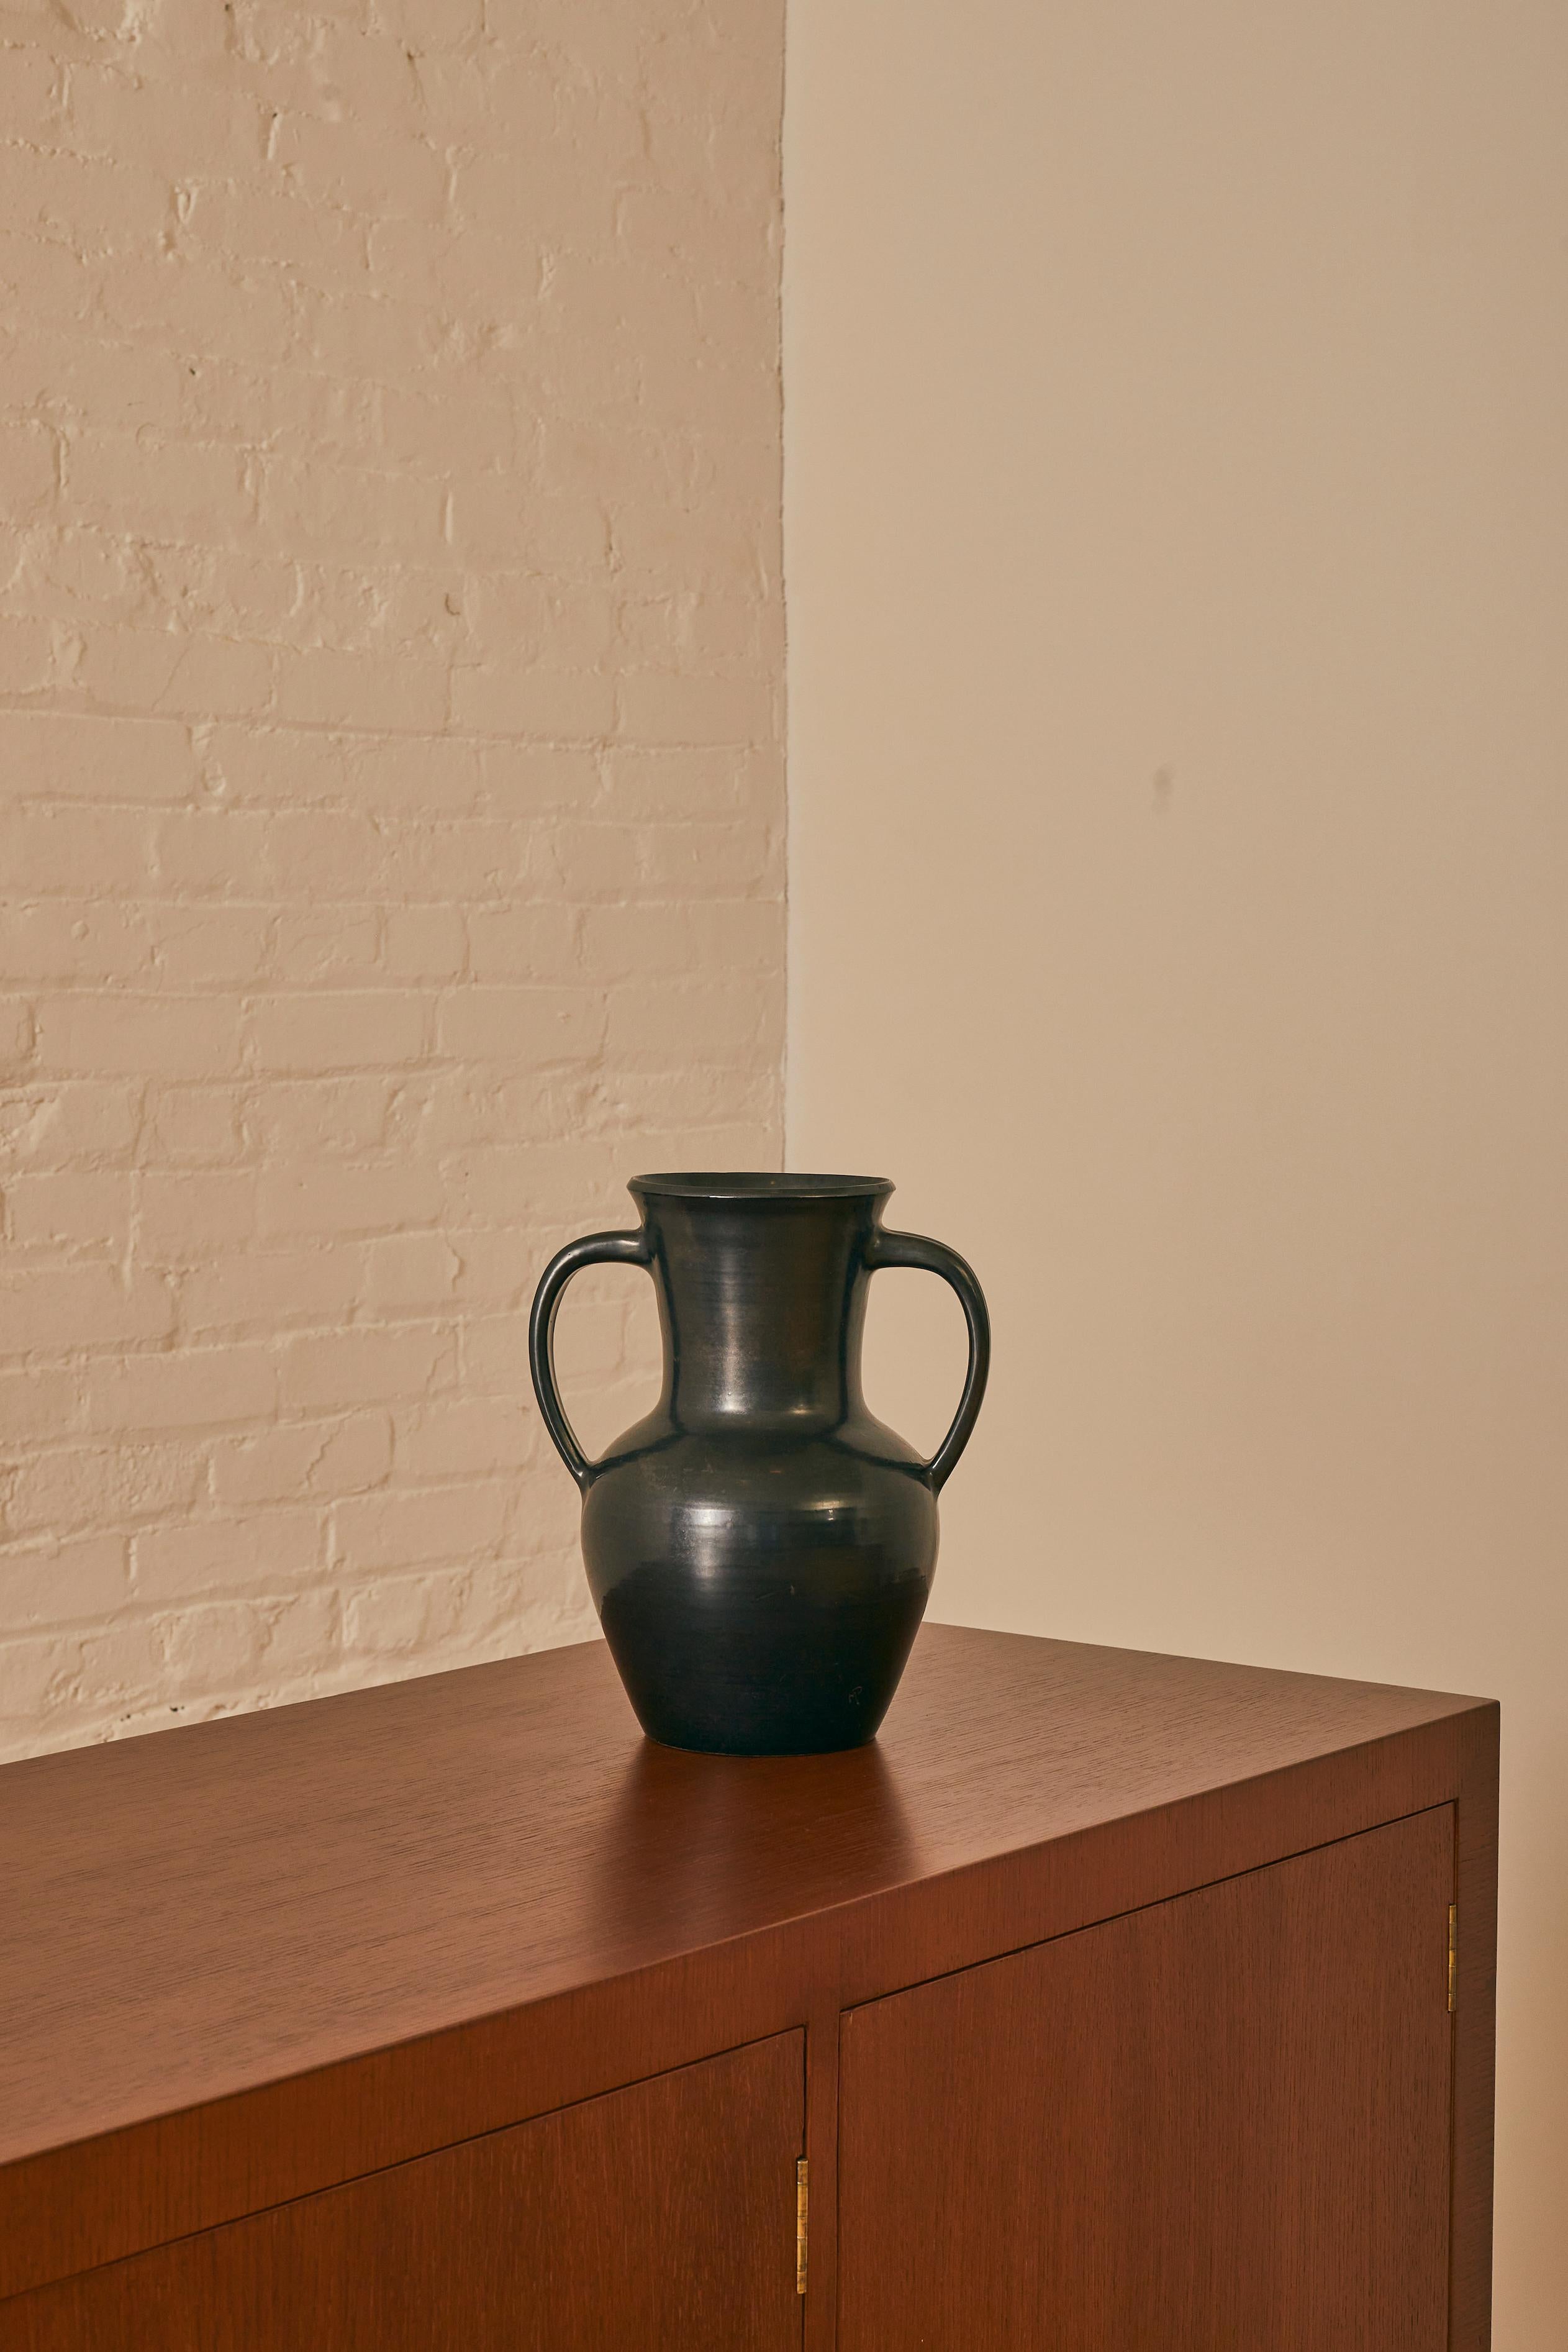 Ceramic Vase by Belgian painter and ceramist Guillaume Met de Penninghen (1912-1990), initialed on side.

